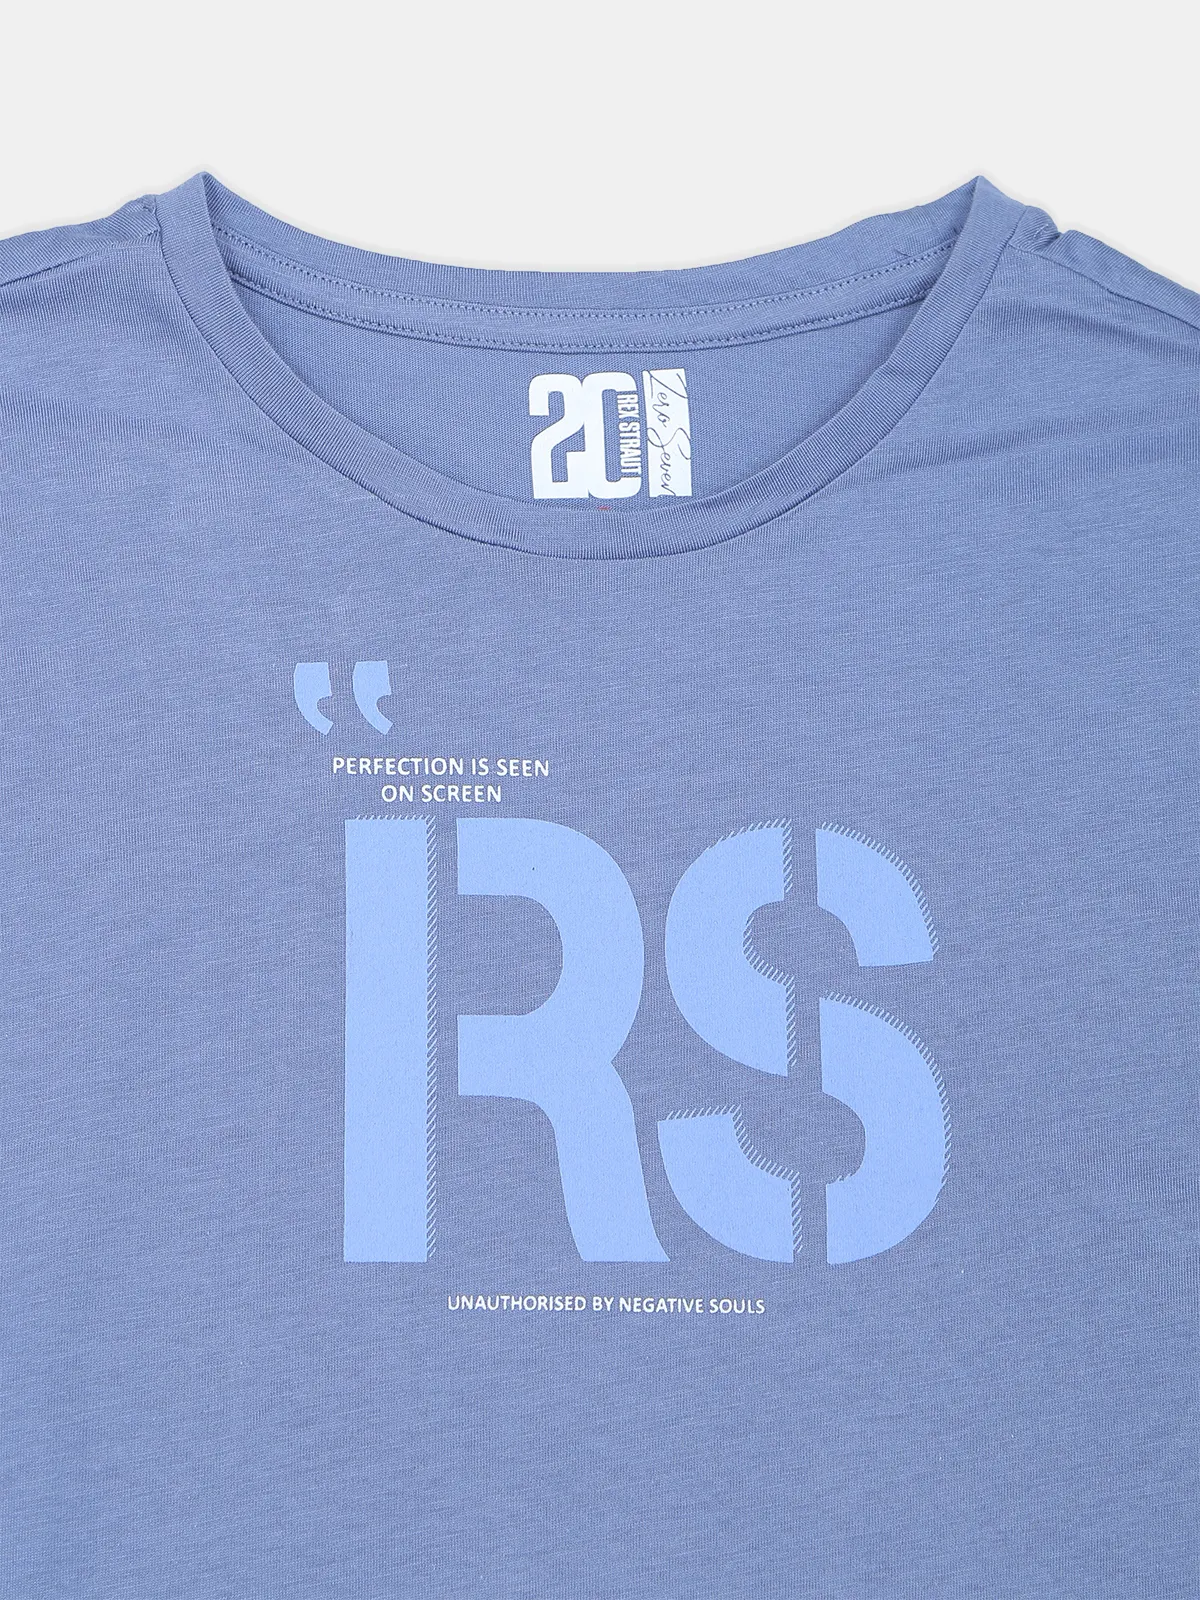 Rex Straut light blue cotton printed t shirt